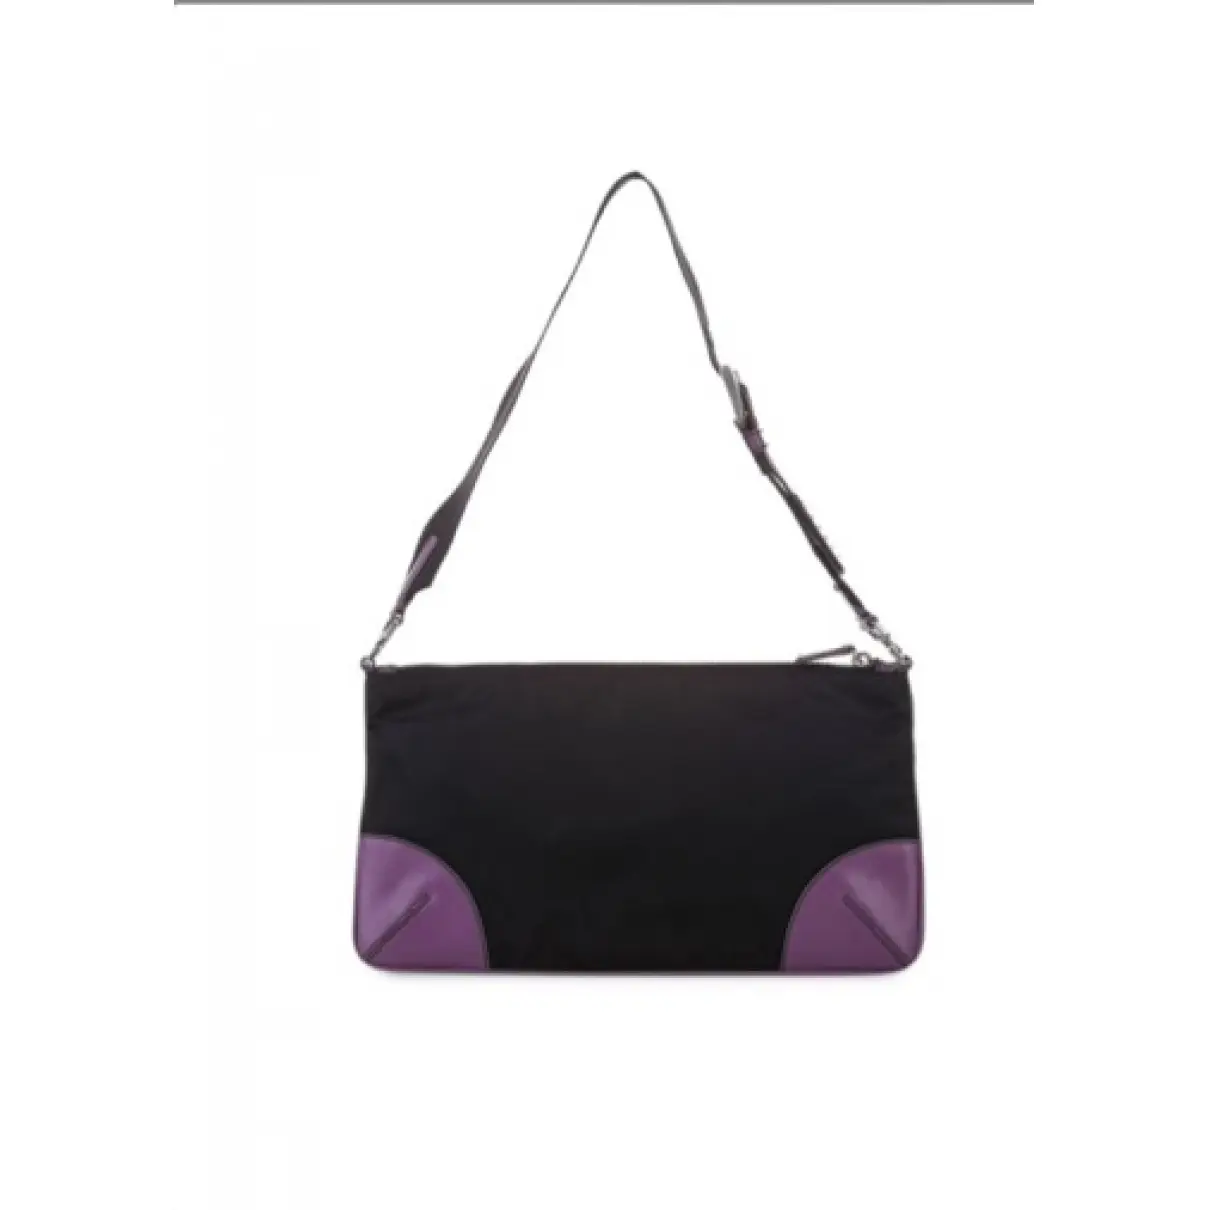 Buy Prada Re-Nylon leather handbag online